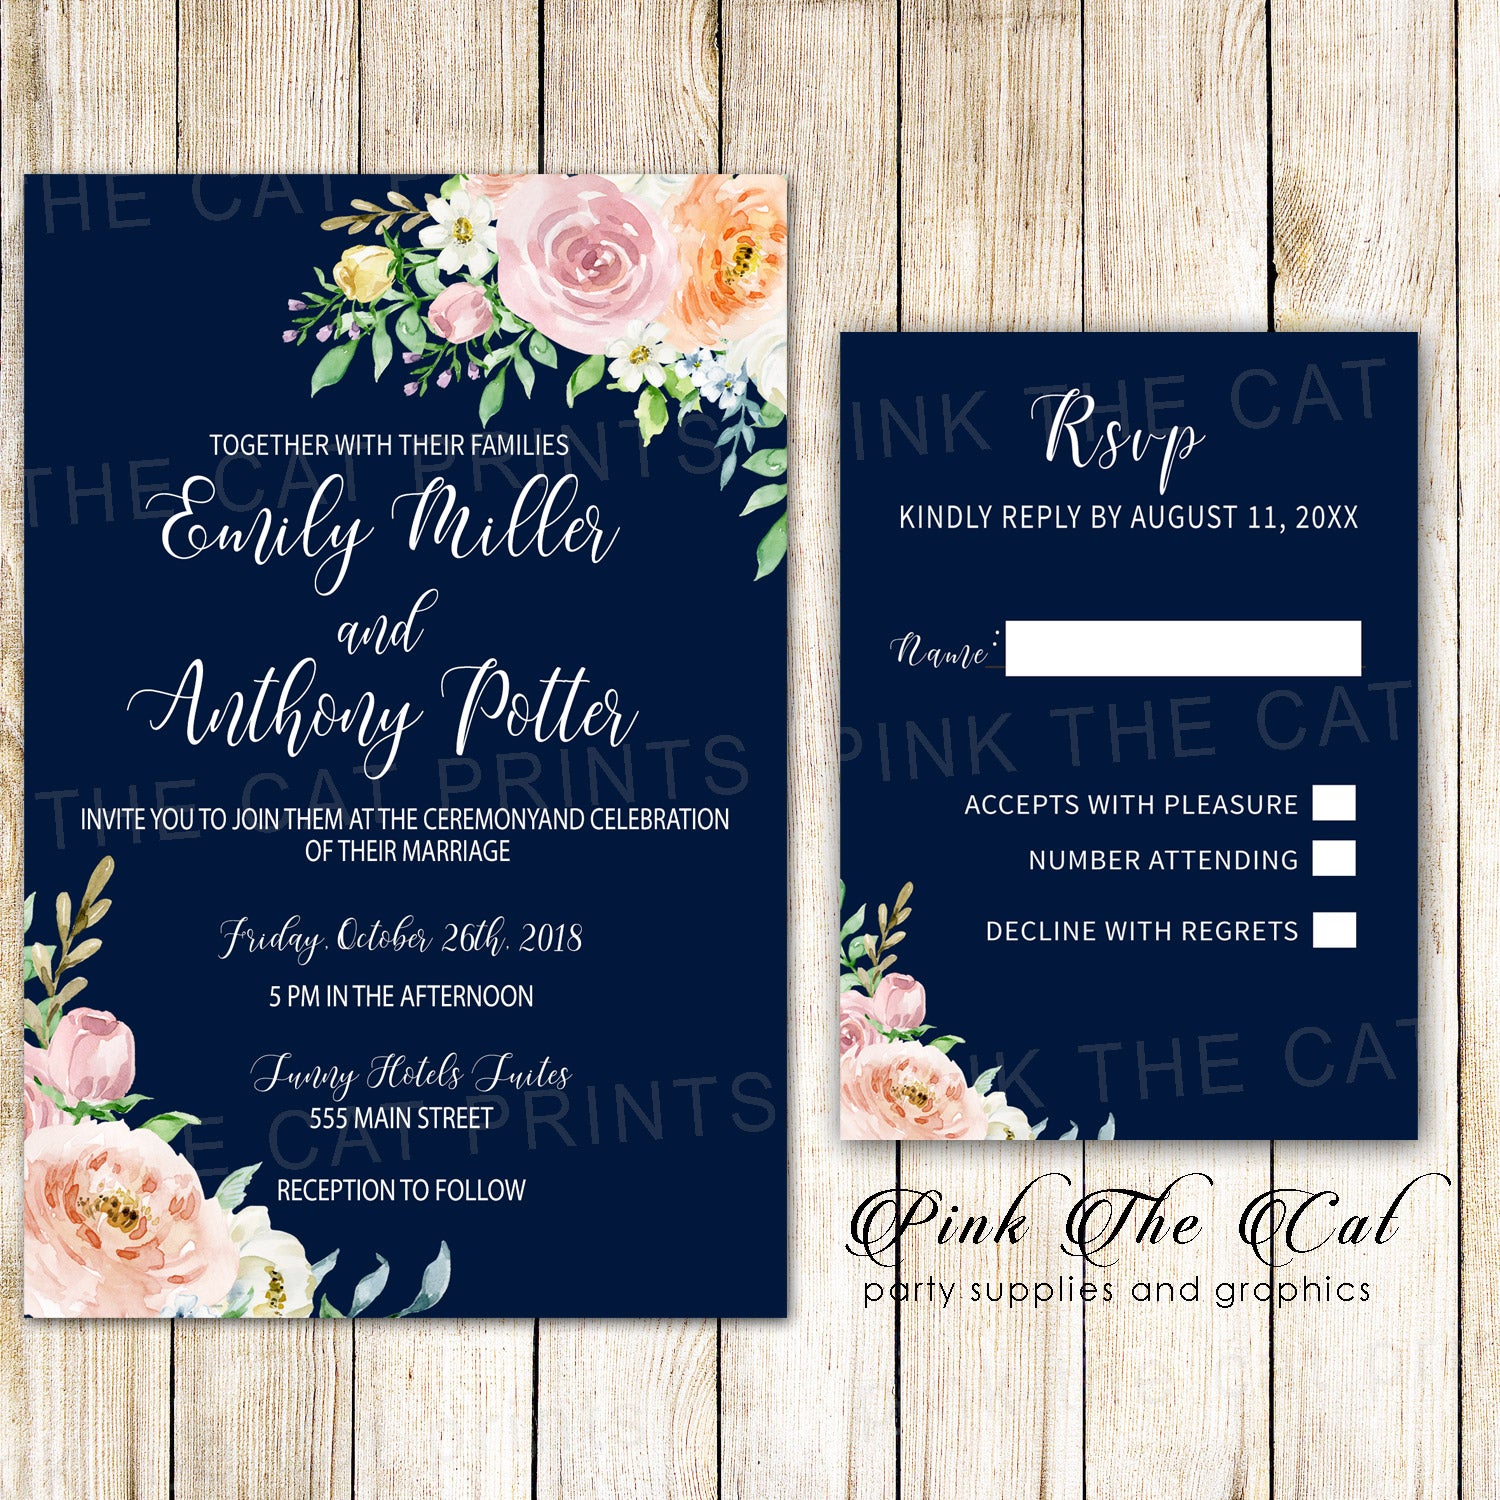 100 Wedding invitations navy blue blush pink floral & RSVP cards